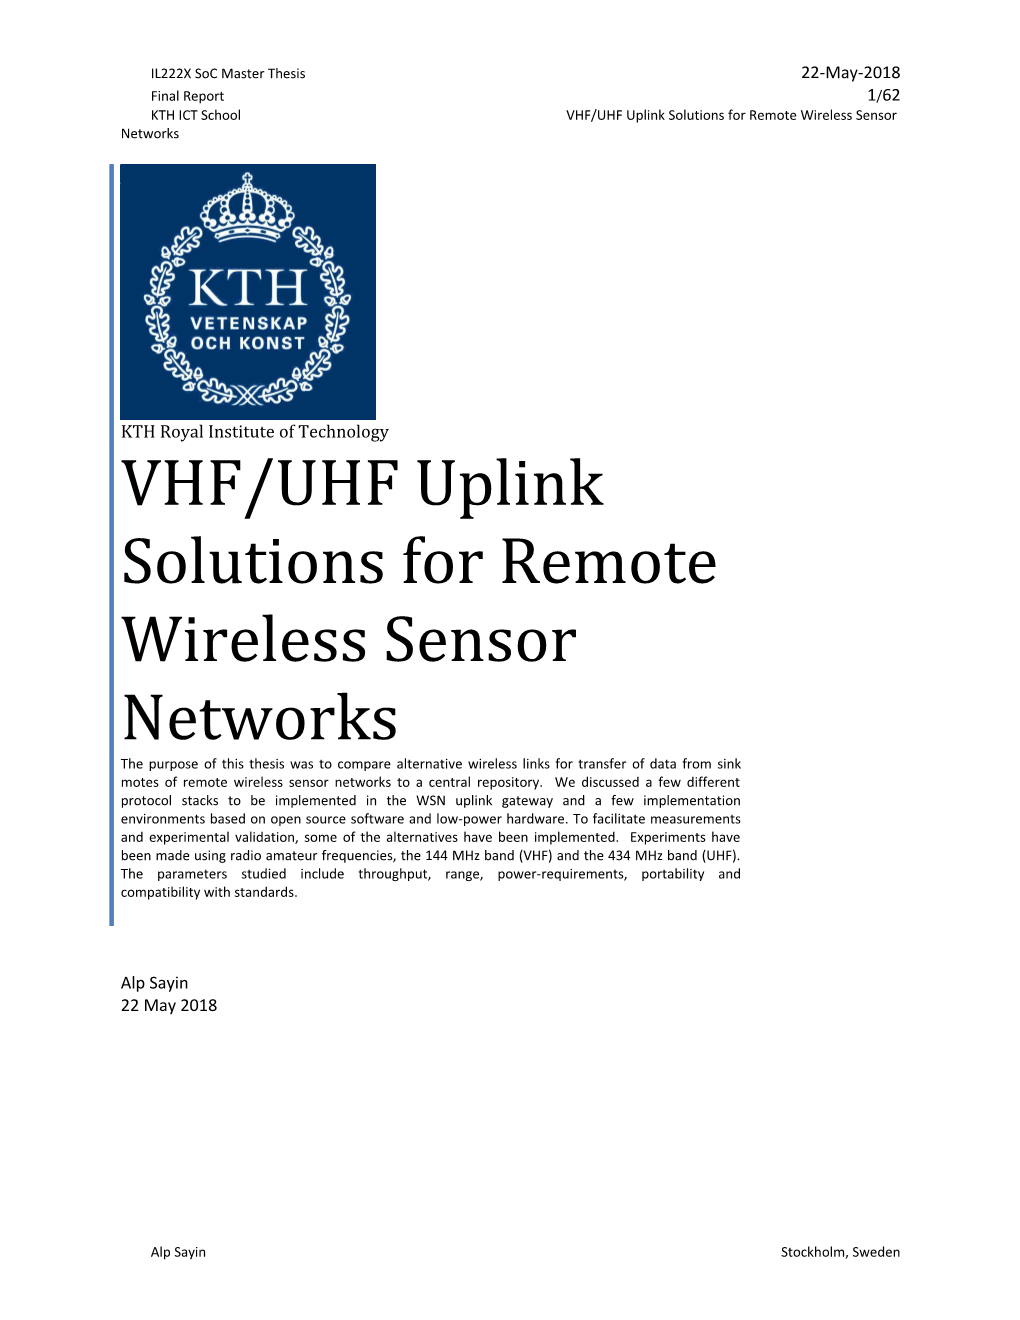 VHF/UHF Uplink Solutions for Remote Wireless Sensor Networks